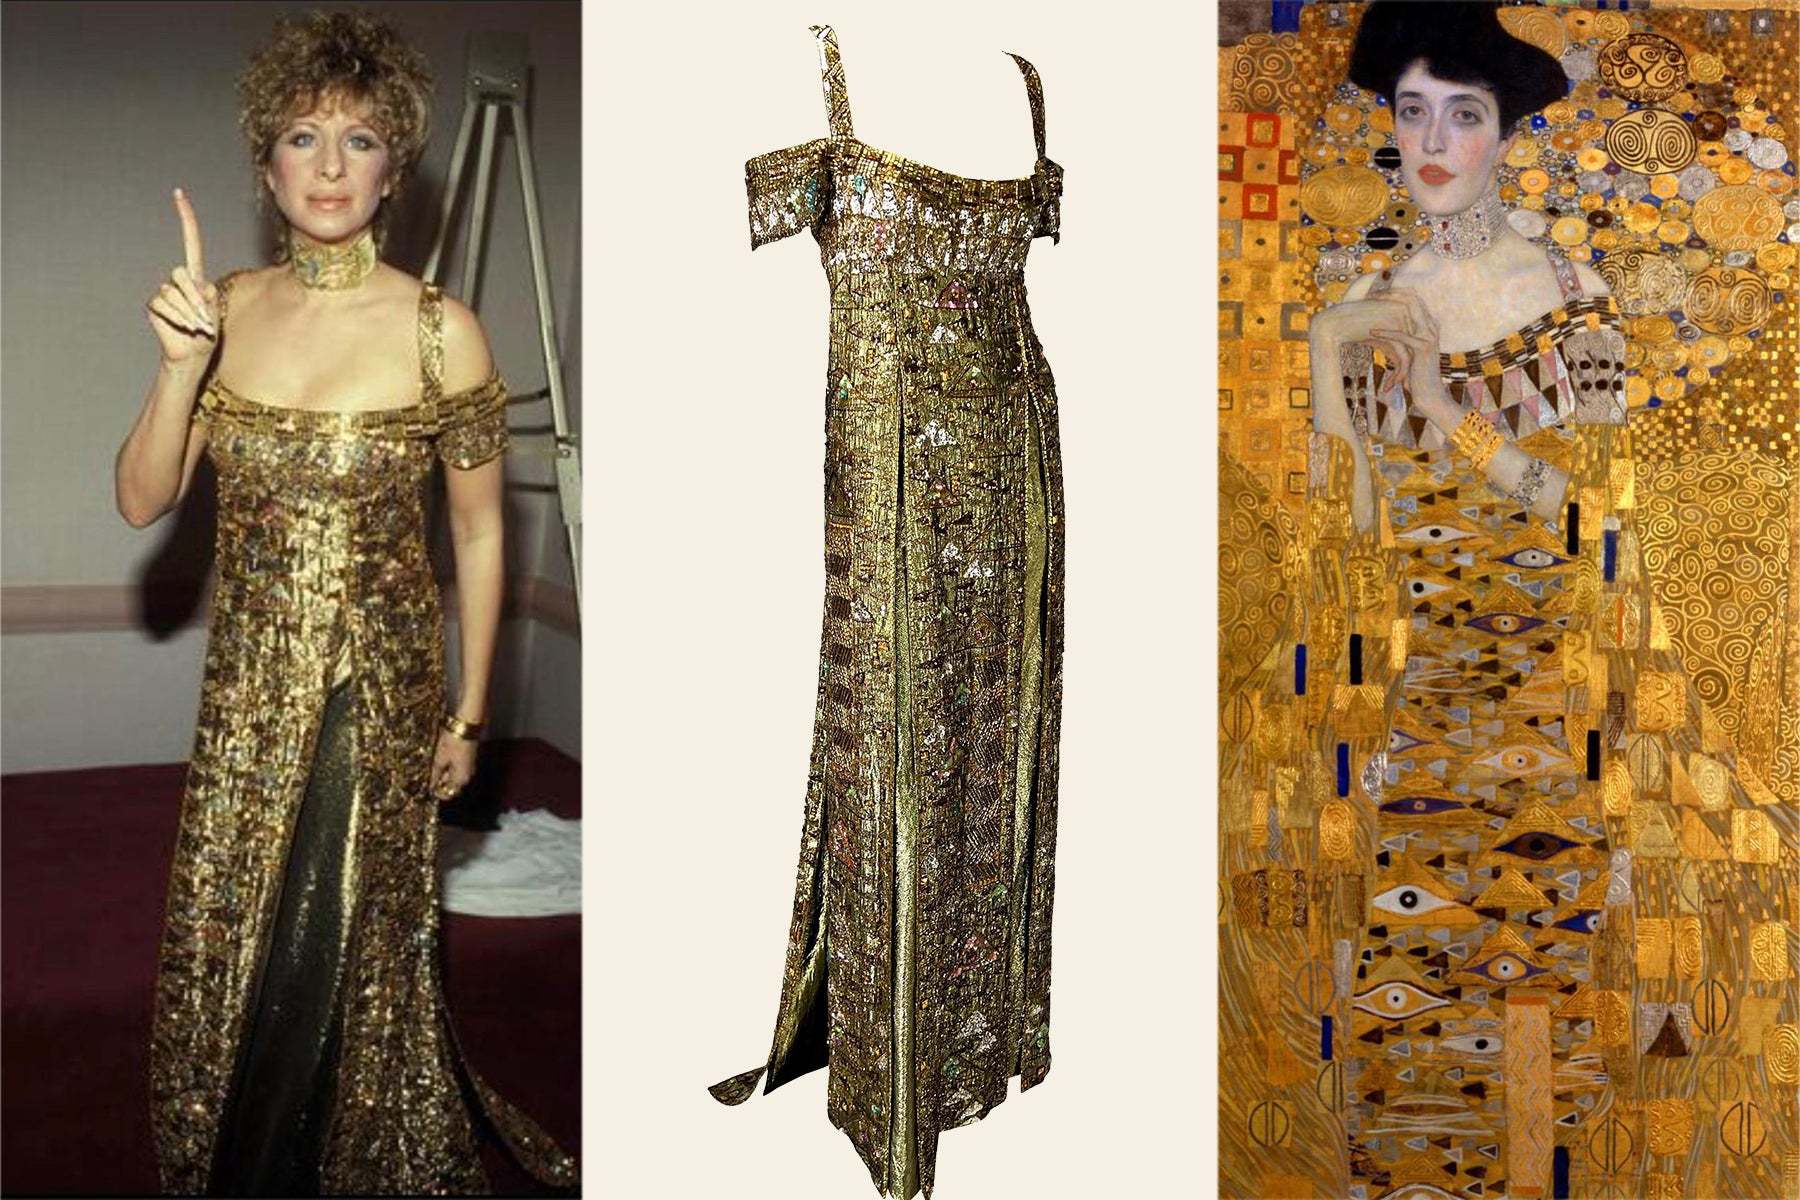 Barbra Streisand Channeled Klimt’s ‘Woman in Gold’ in This Shimmering Dress